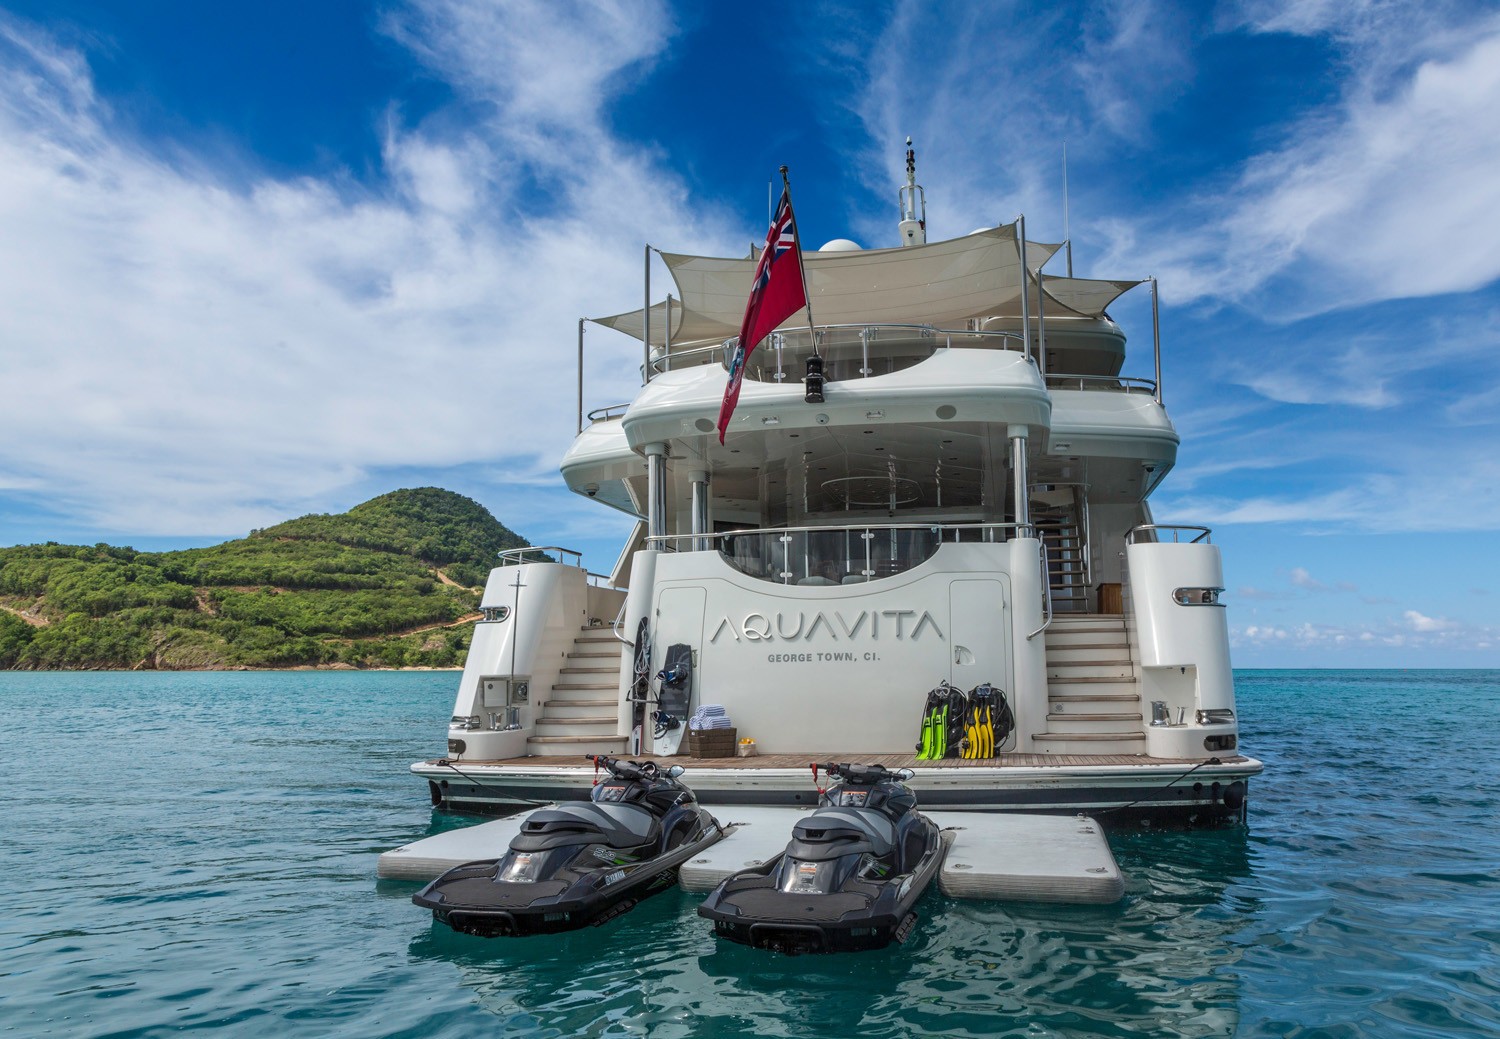 The 49m Yacht AQUAVITA